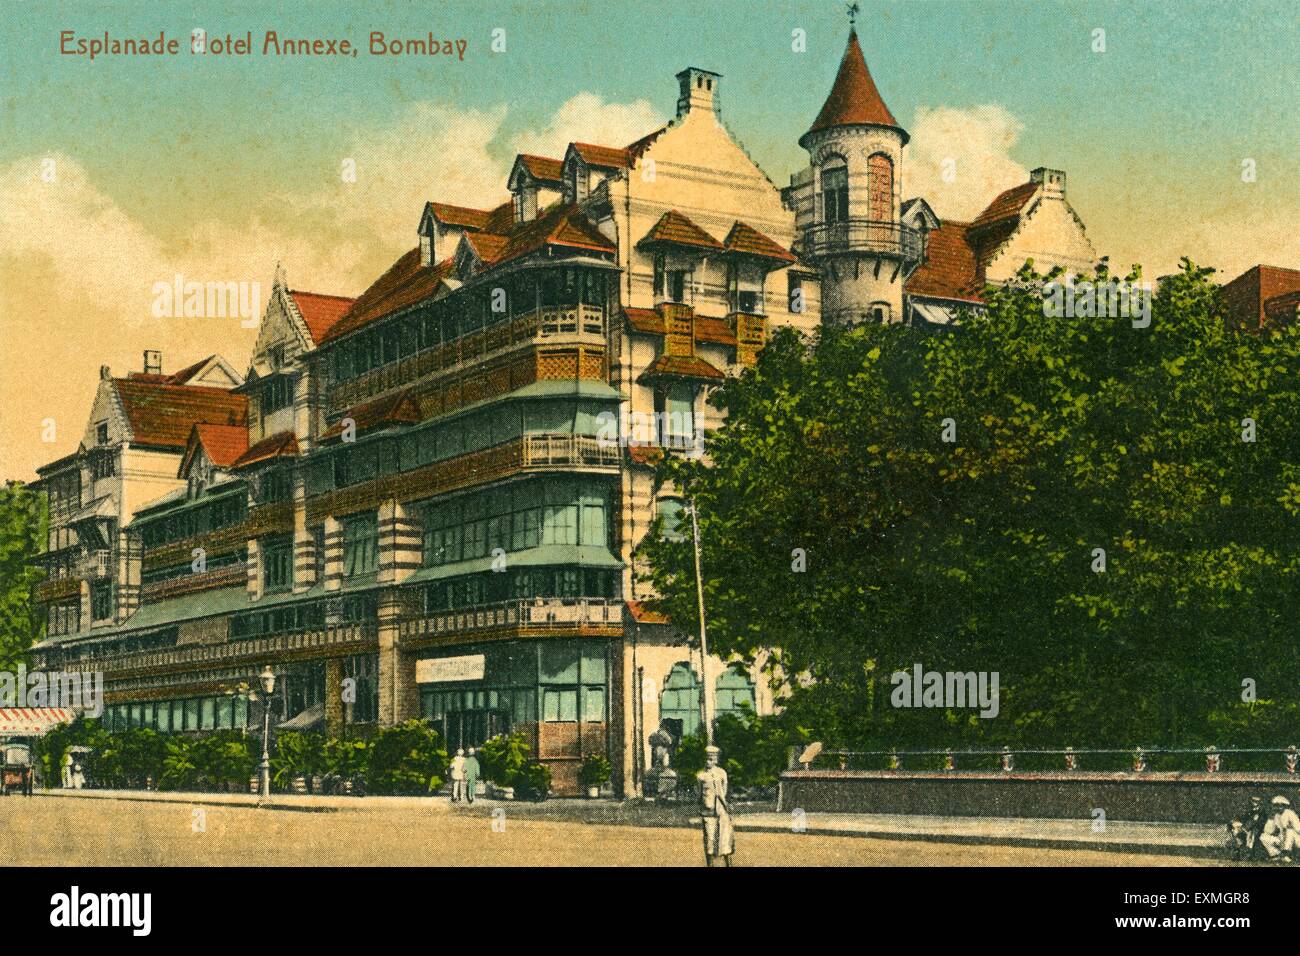 Ancienne image vintage 1900 ; Esplanade Hotel annexe ; Bombay Now Mumbai ; Maharashtra ; Inde , asie Banque D'Images